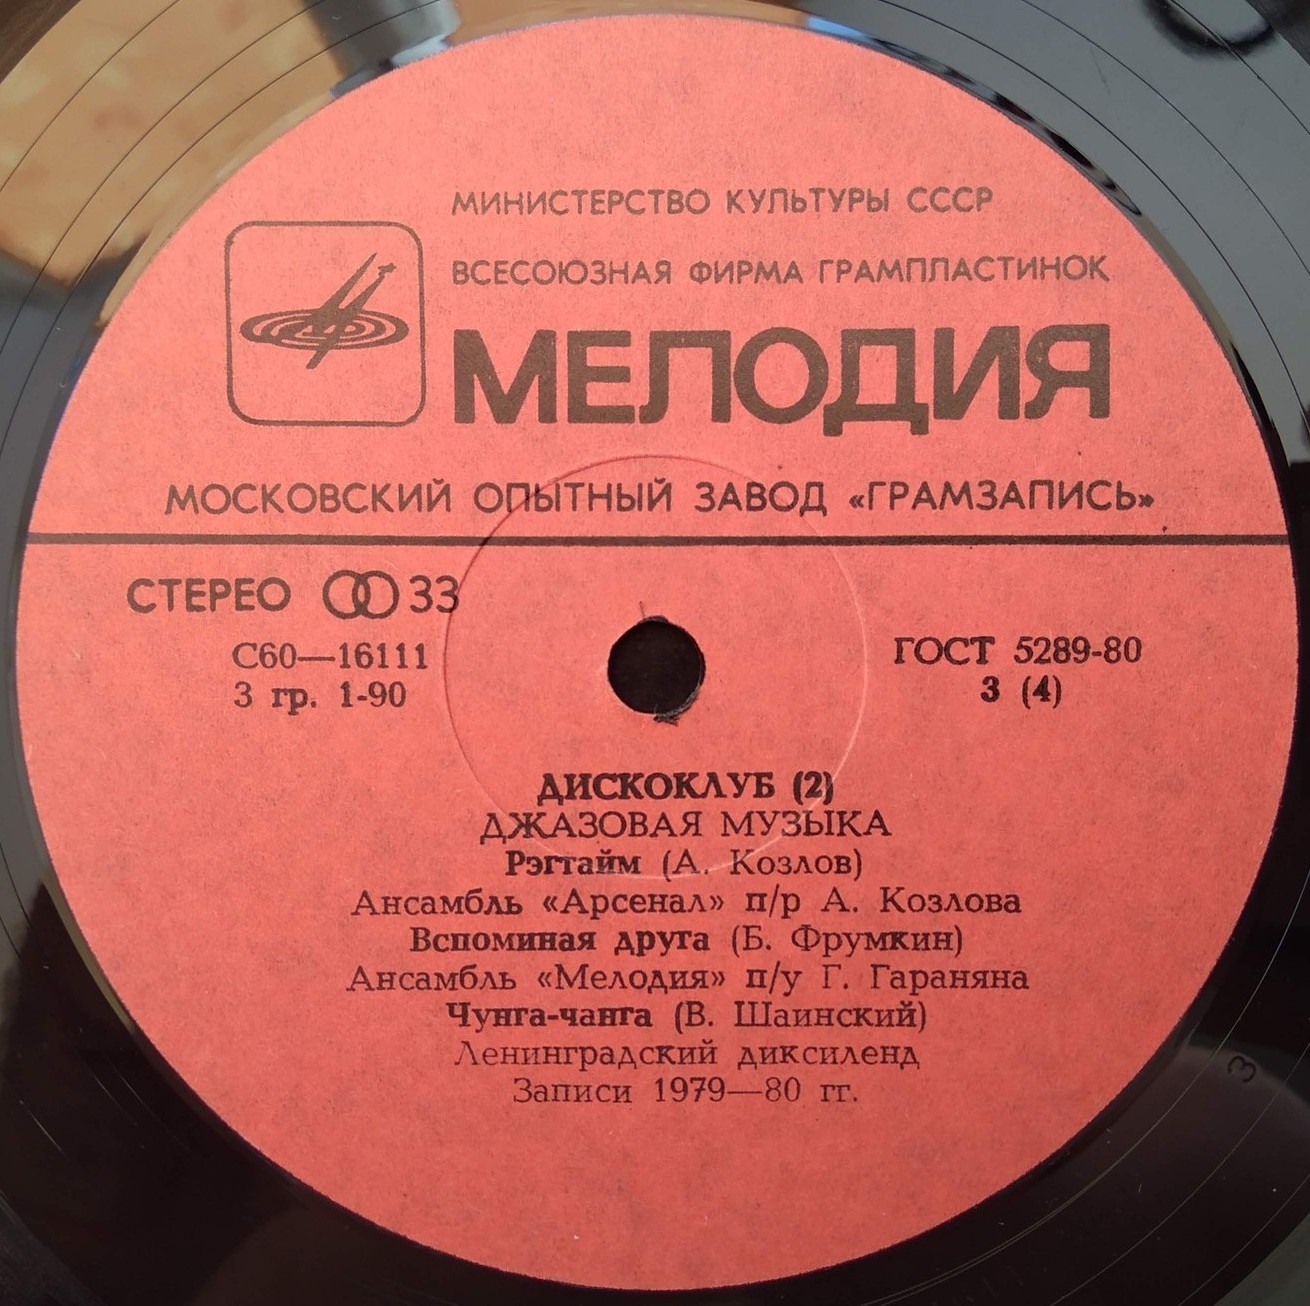 ДИСКОКЛУБ-2 (2 пластинка). Джазовая музыка